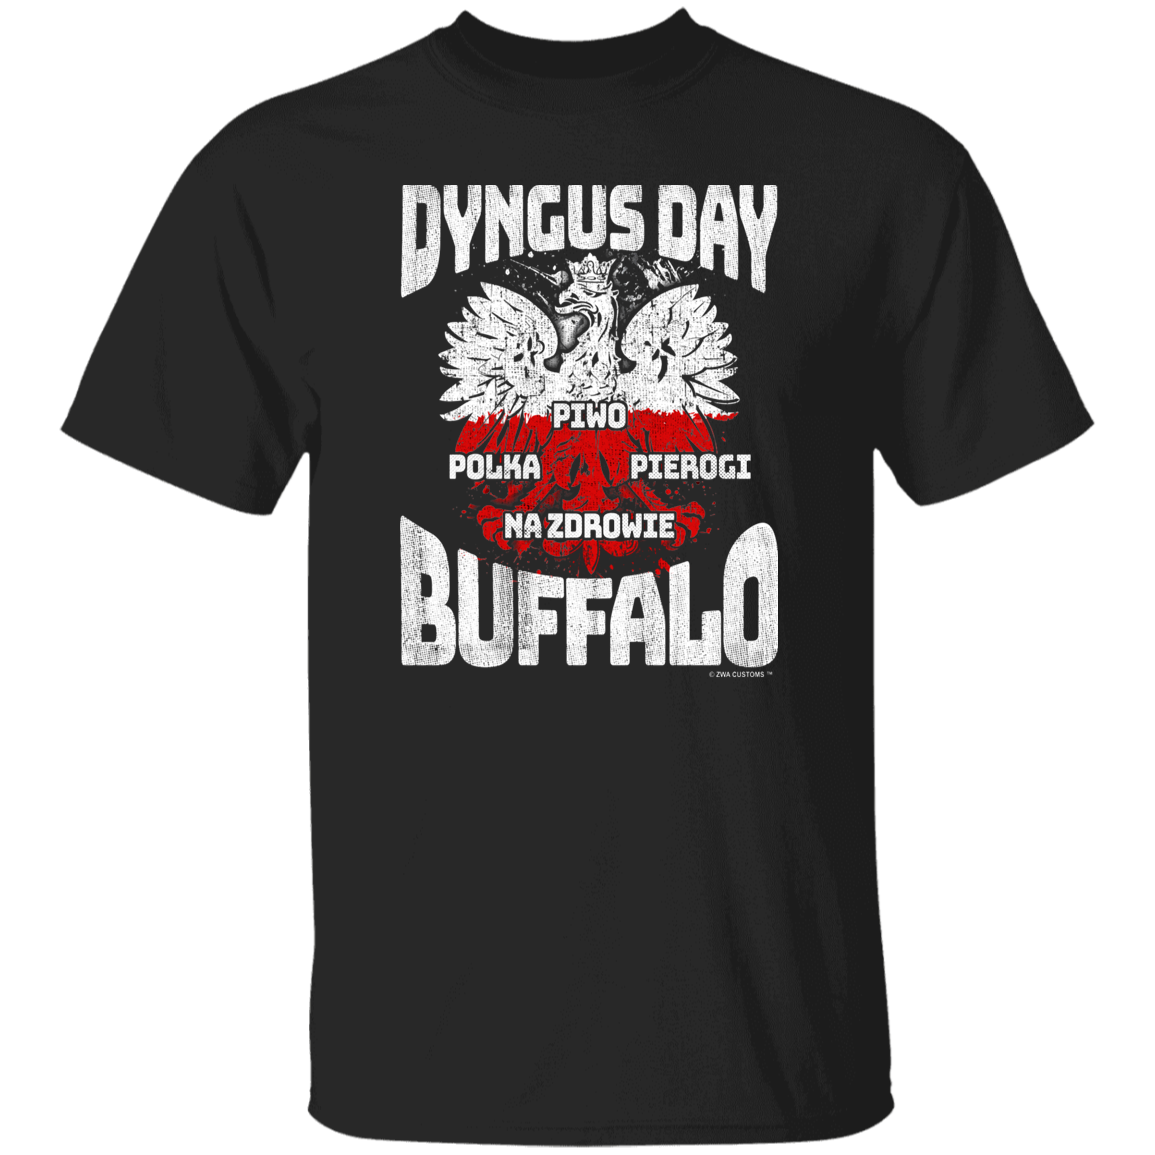 Dyngus Day Buffalo New York Apparel CustomCat G500 5.3 oz. T-Shirt Black S